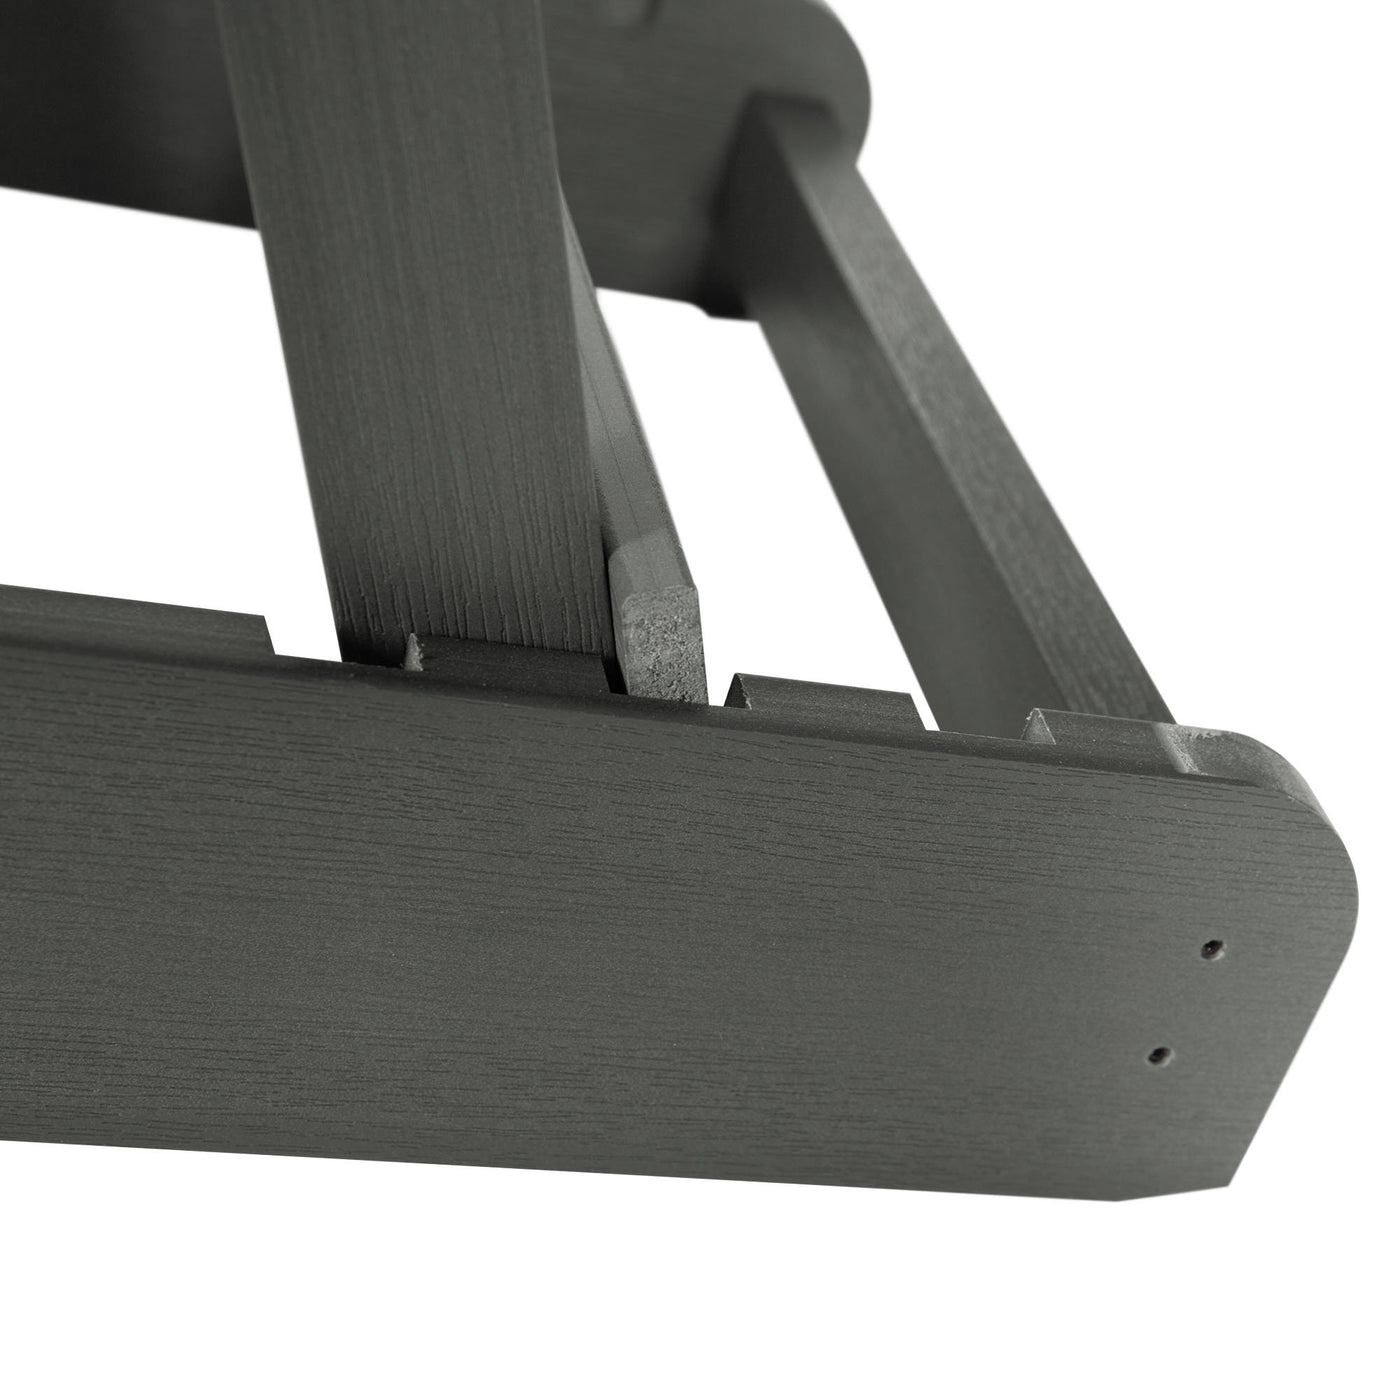 Close up of folding mechanism for gray Hamilton Adirondack chair